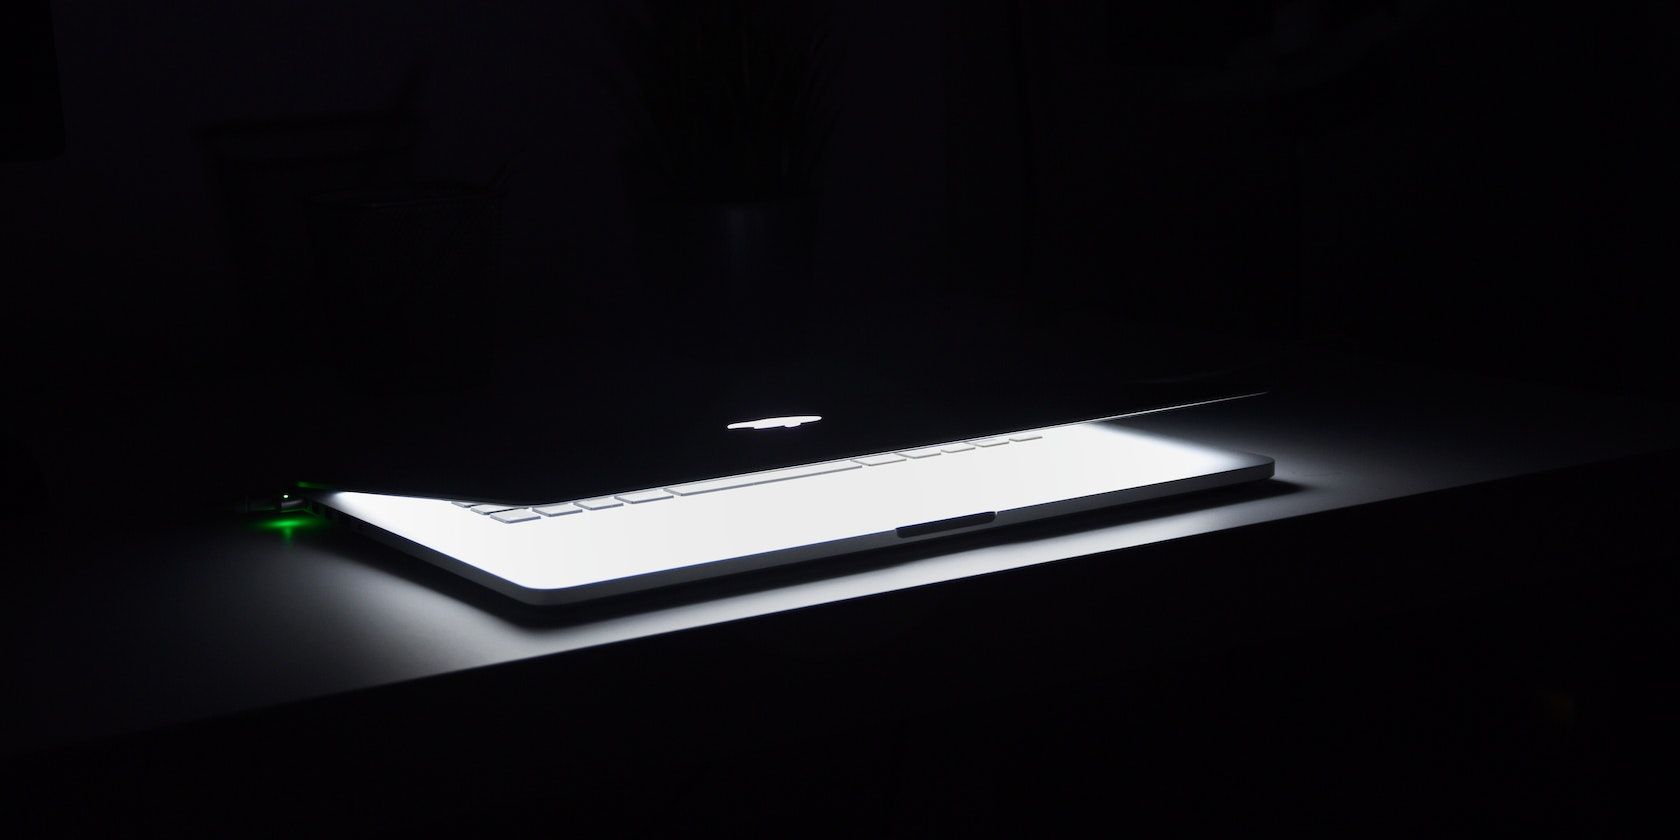 Half-closed MacBook glowing in a dark room